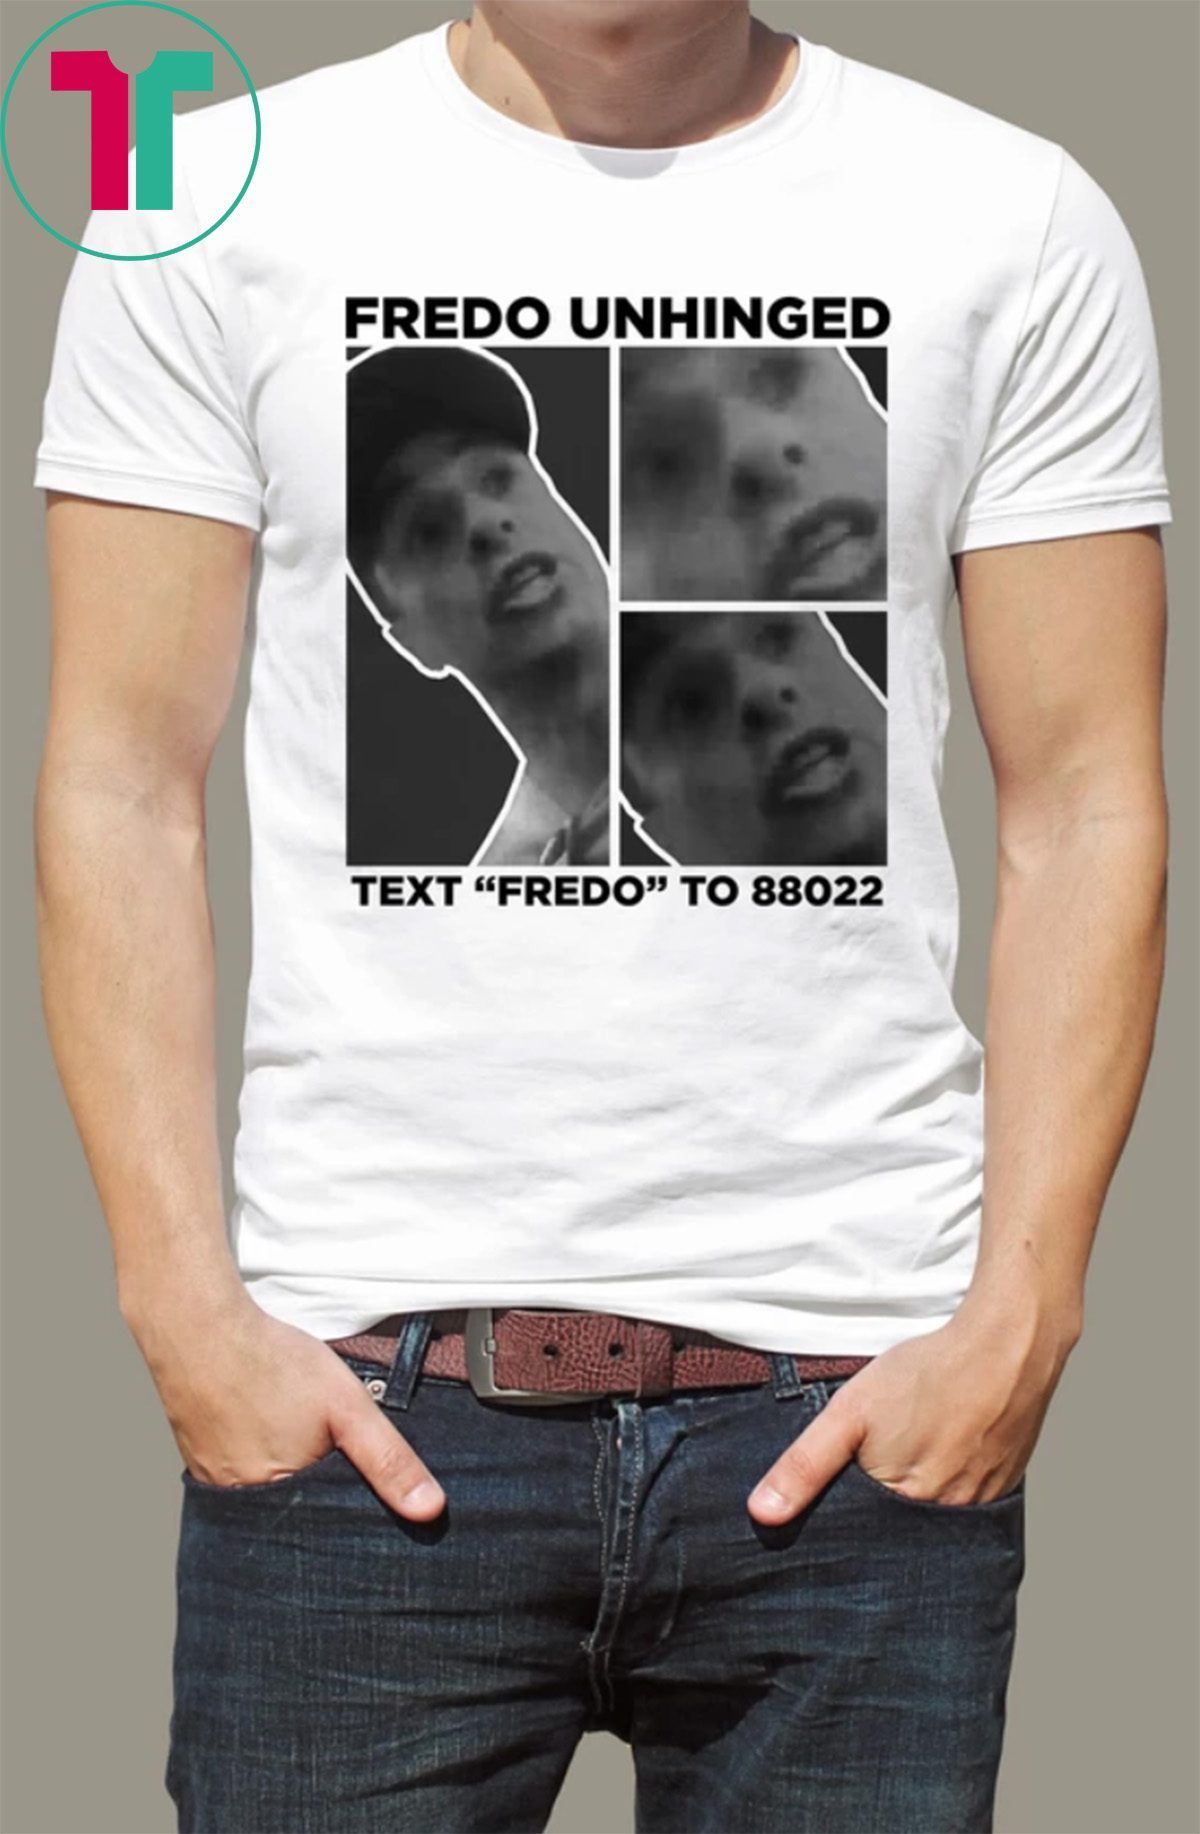 Chris Cuomo Fredo Unhinged T-Shirt. 